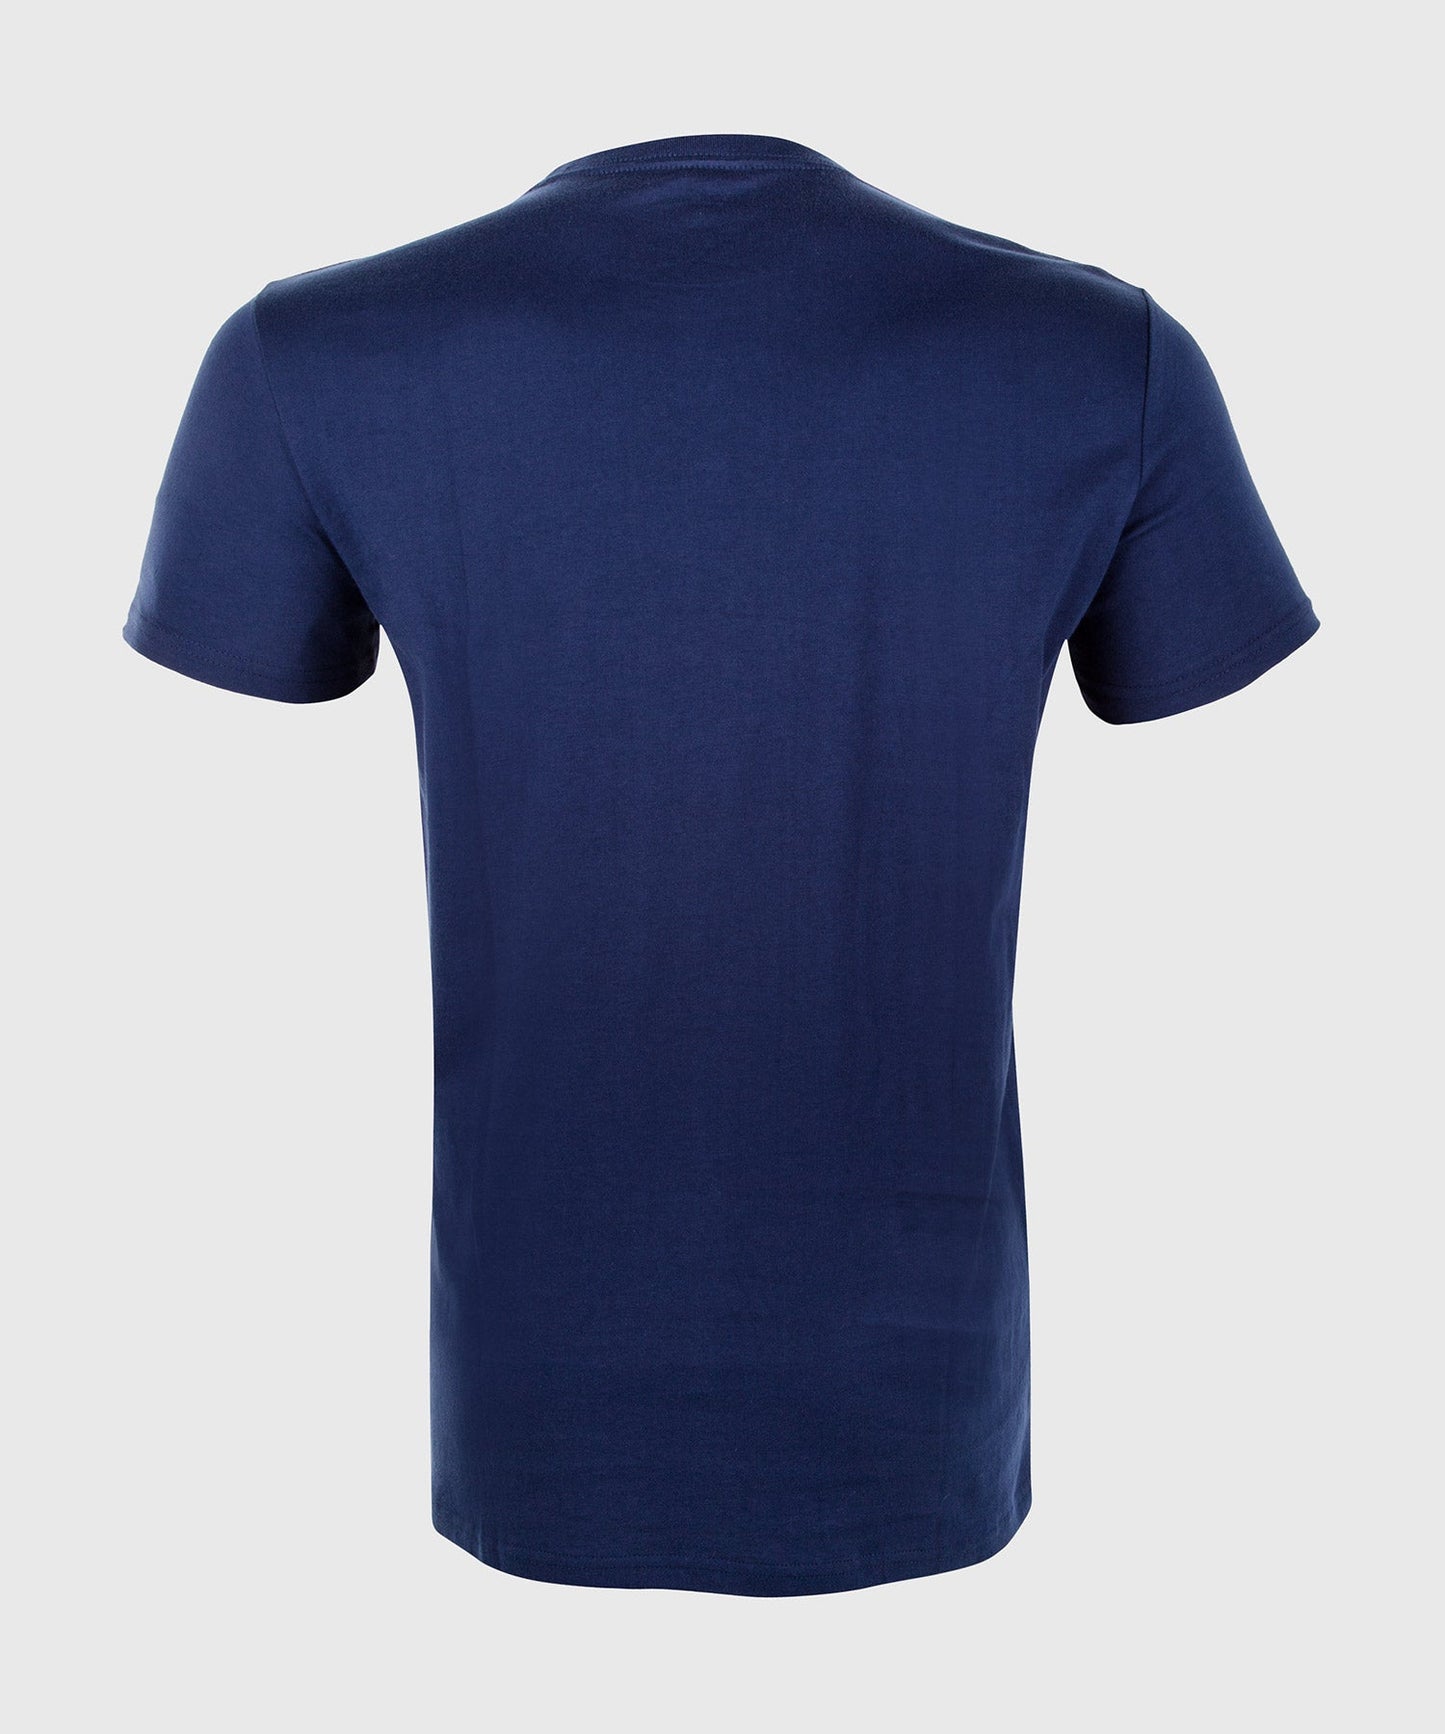 Venum Classic T-shirt - Navy Blue